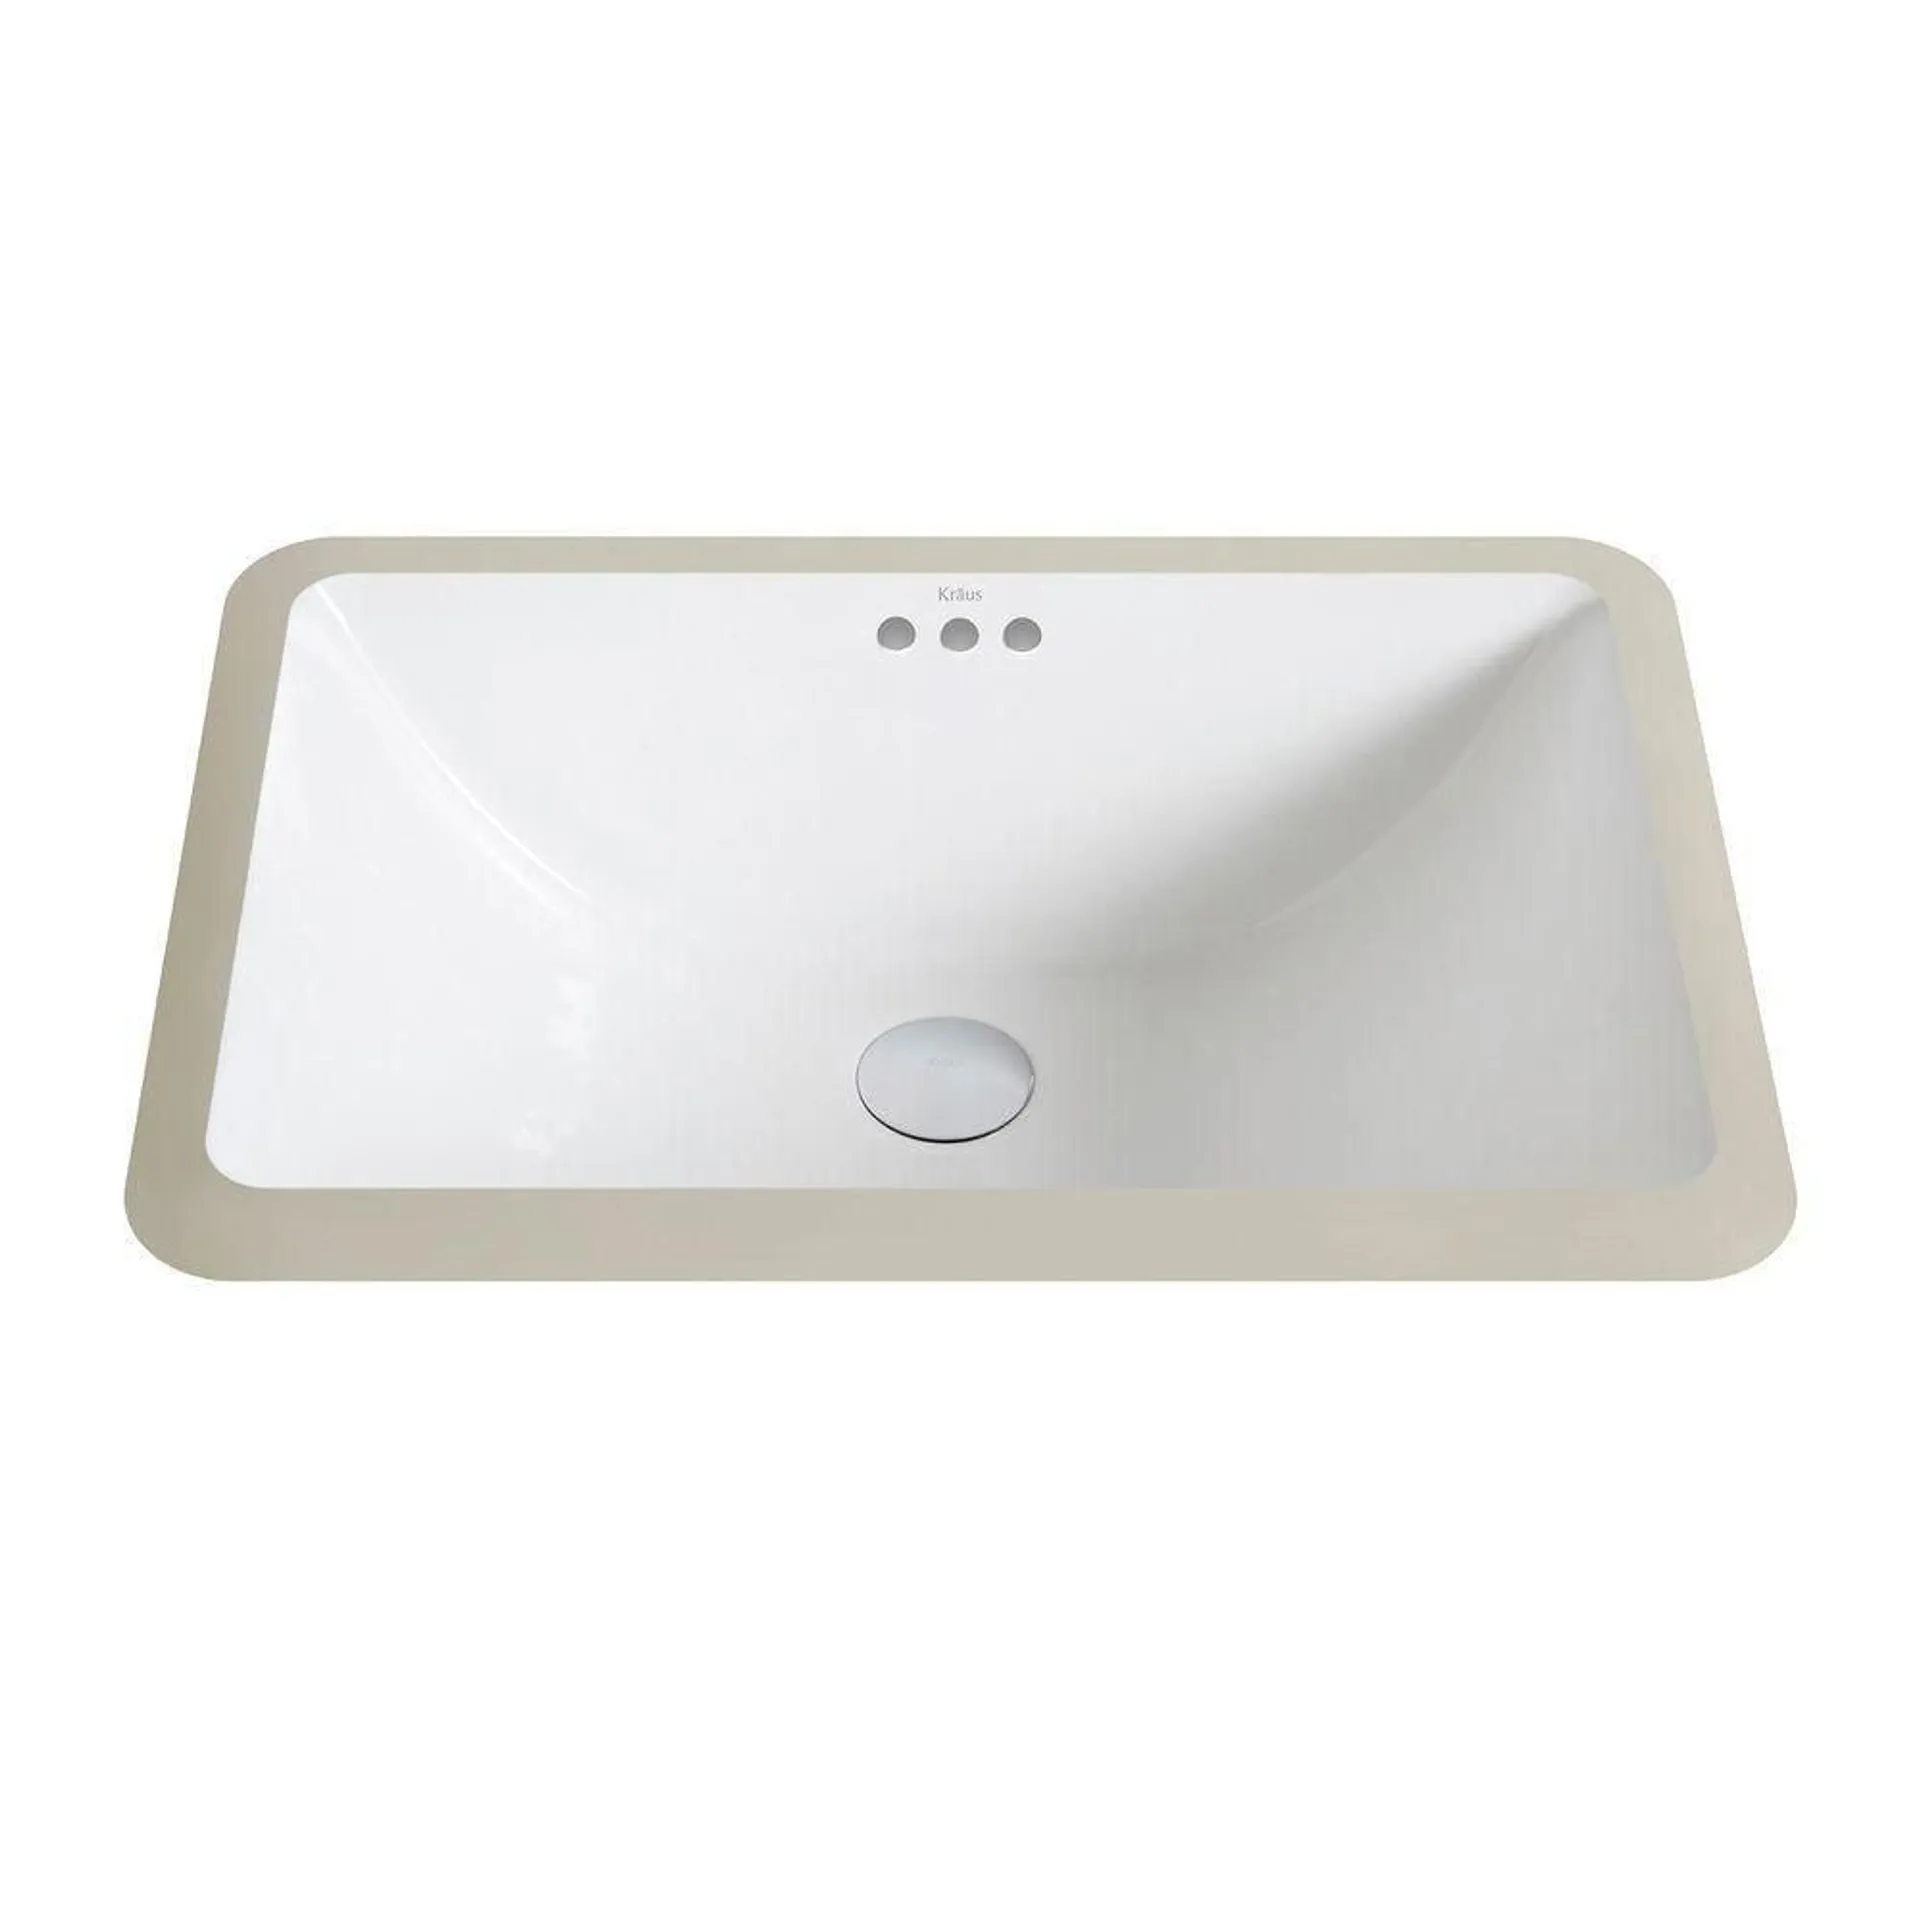 Elavo Small Ceramic Rectangular Undermount Bathroom Sink with Overflow in White